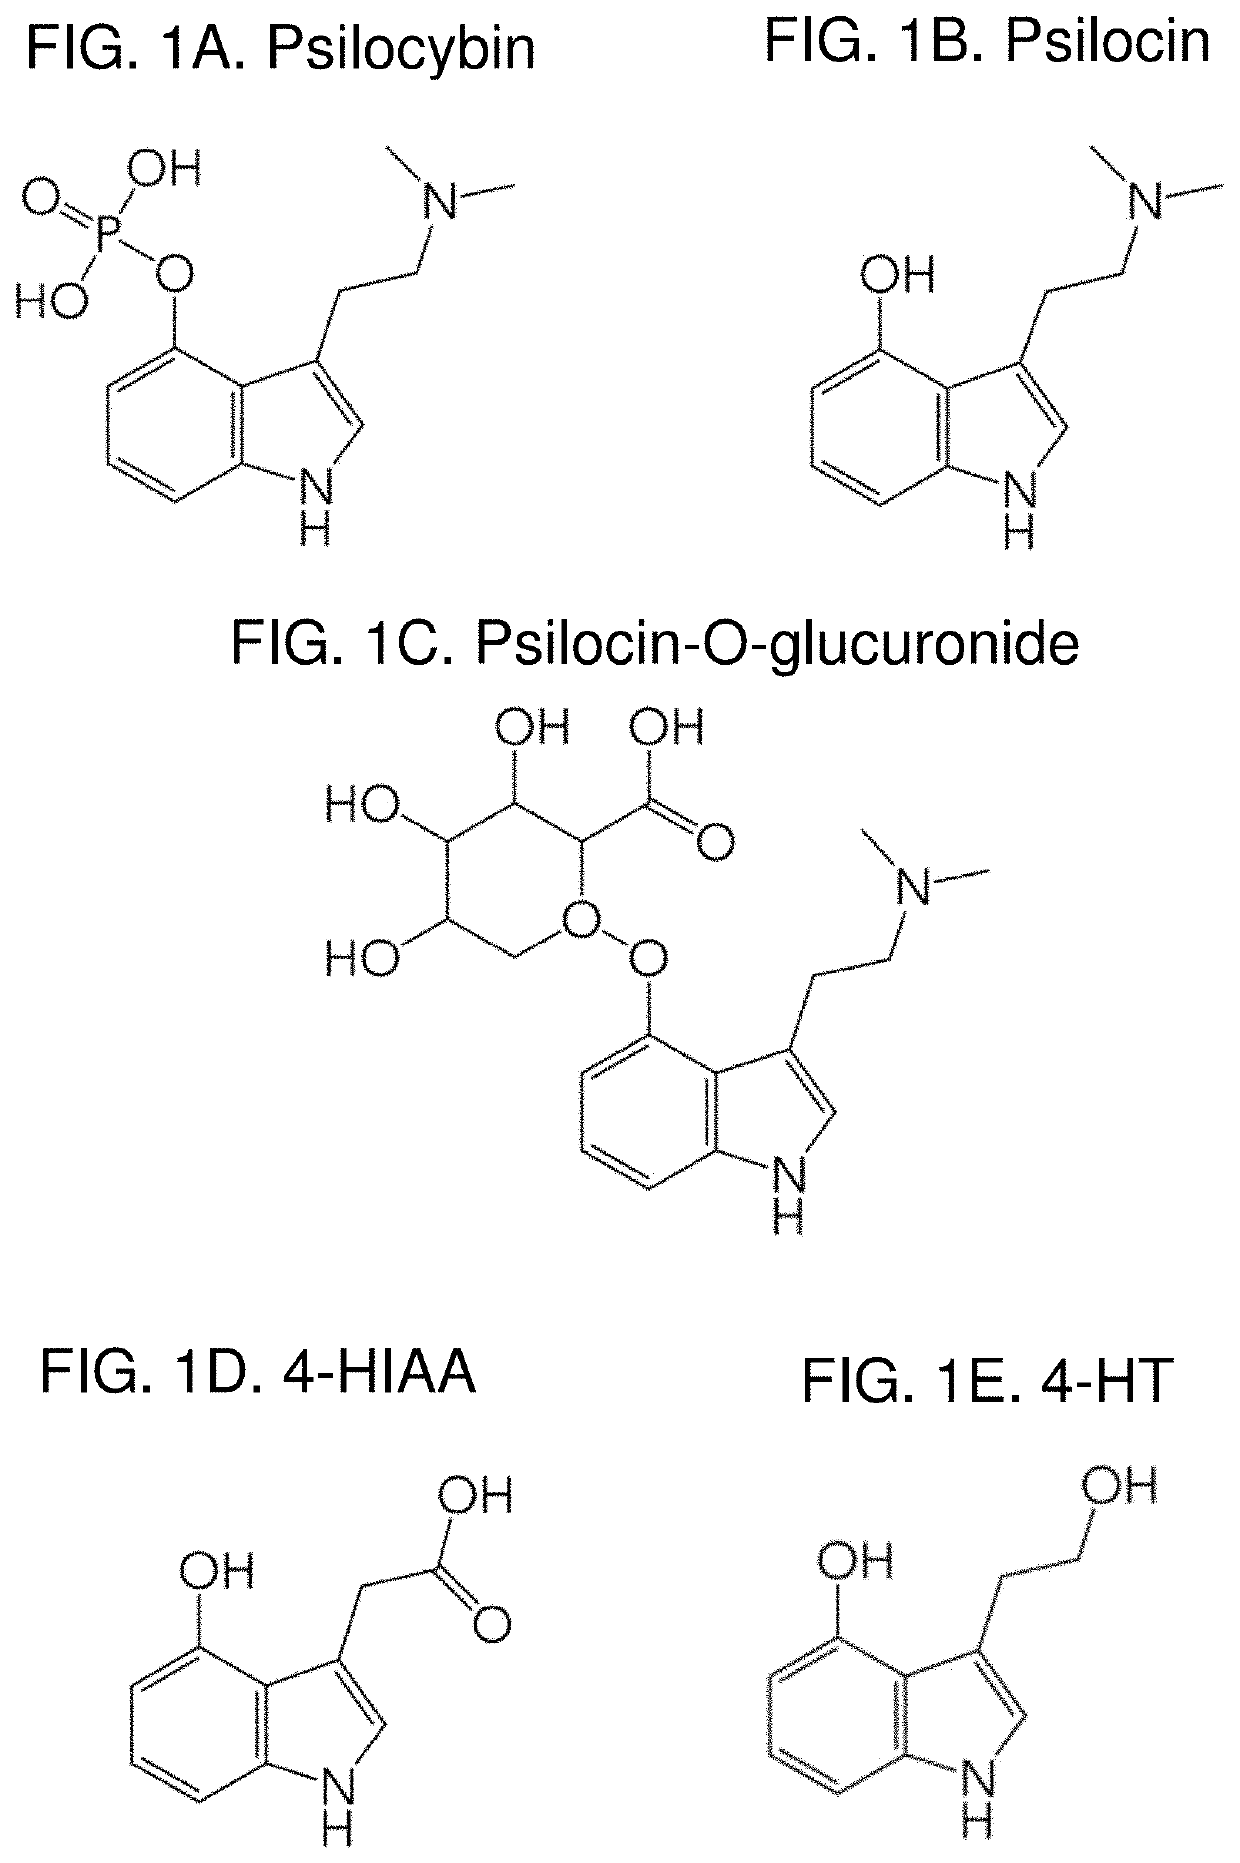 Method of quantifying psilocybin's main metabolites, psilocin and 4-hydroxyindole-3-acetic acid, in human plasma